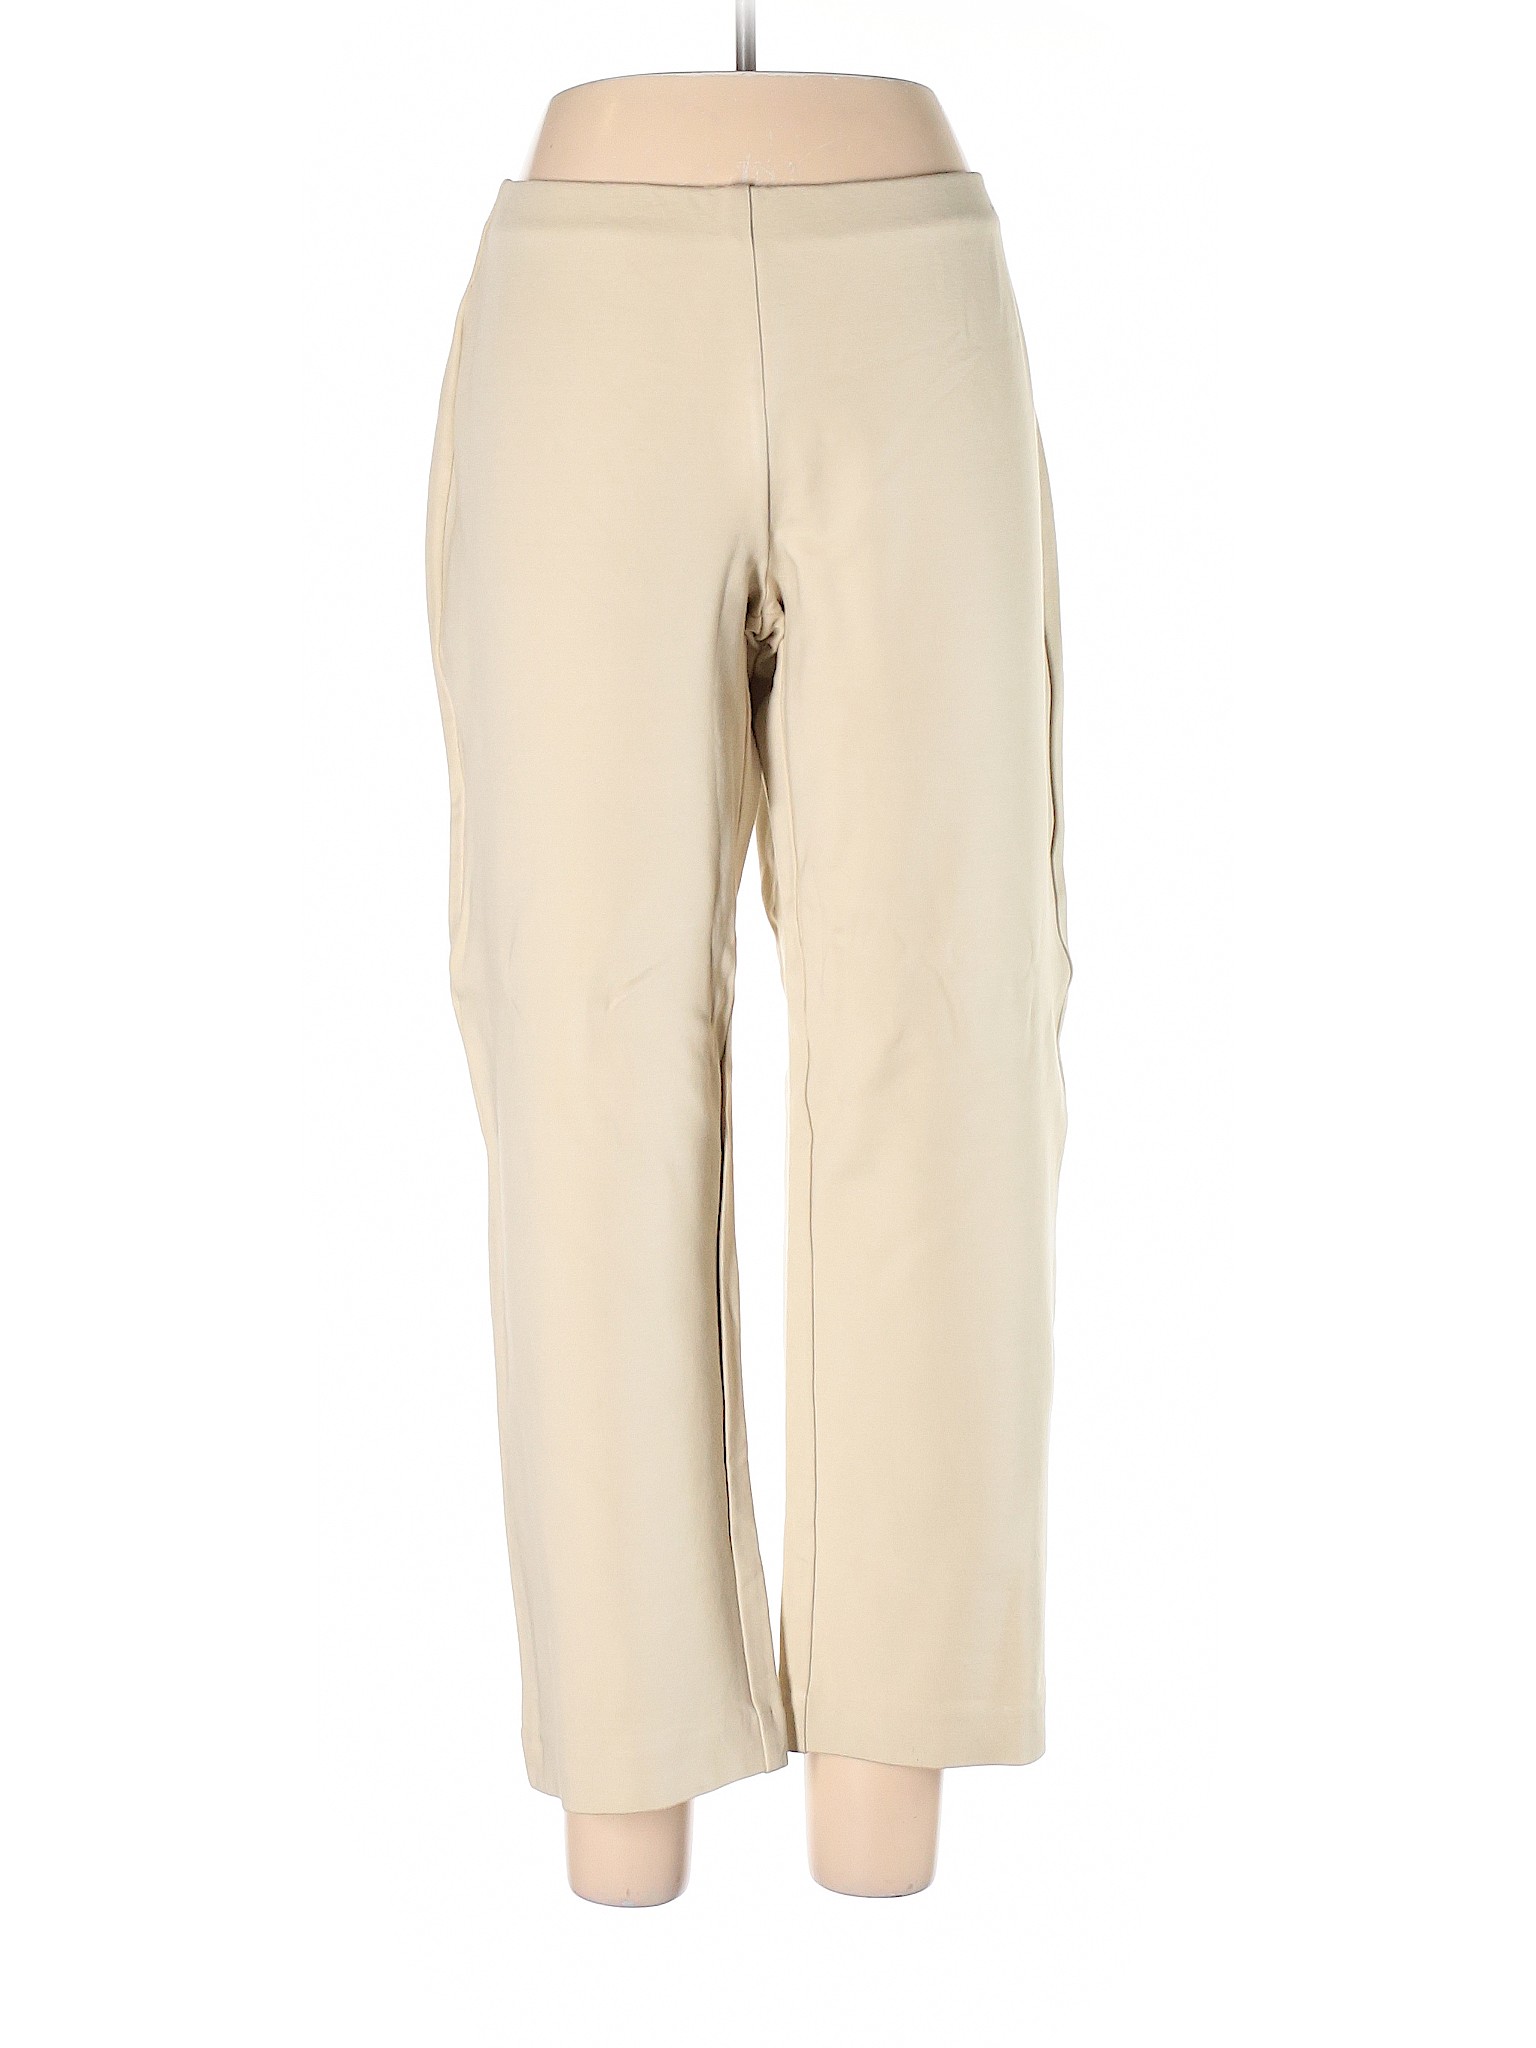 Coldwater Creek Women Brown Casual Pants L Petites | eBay